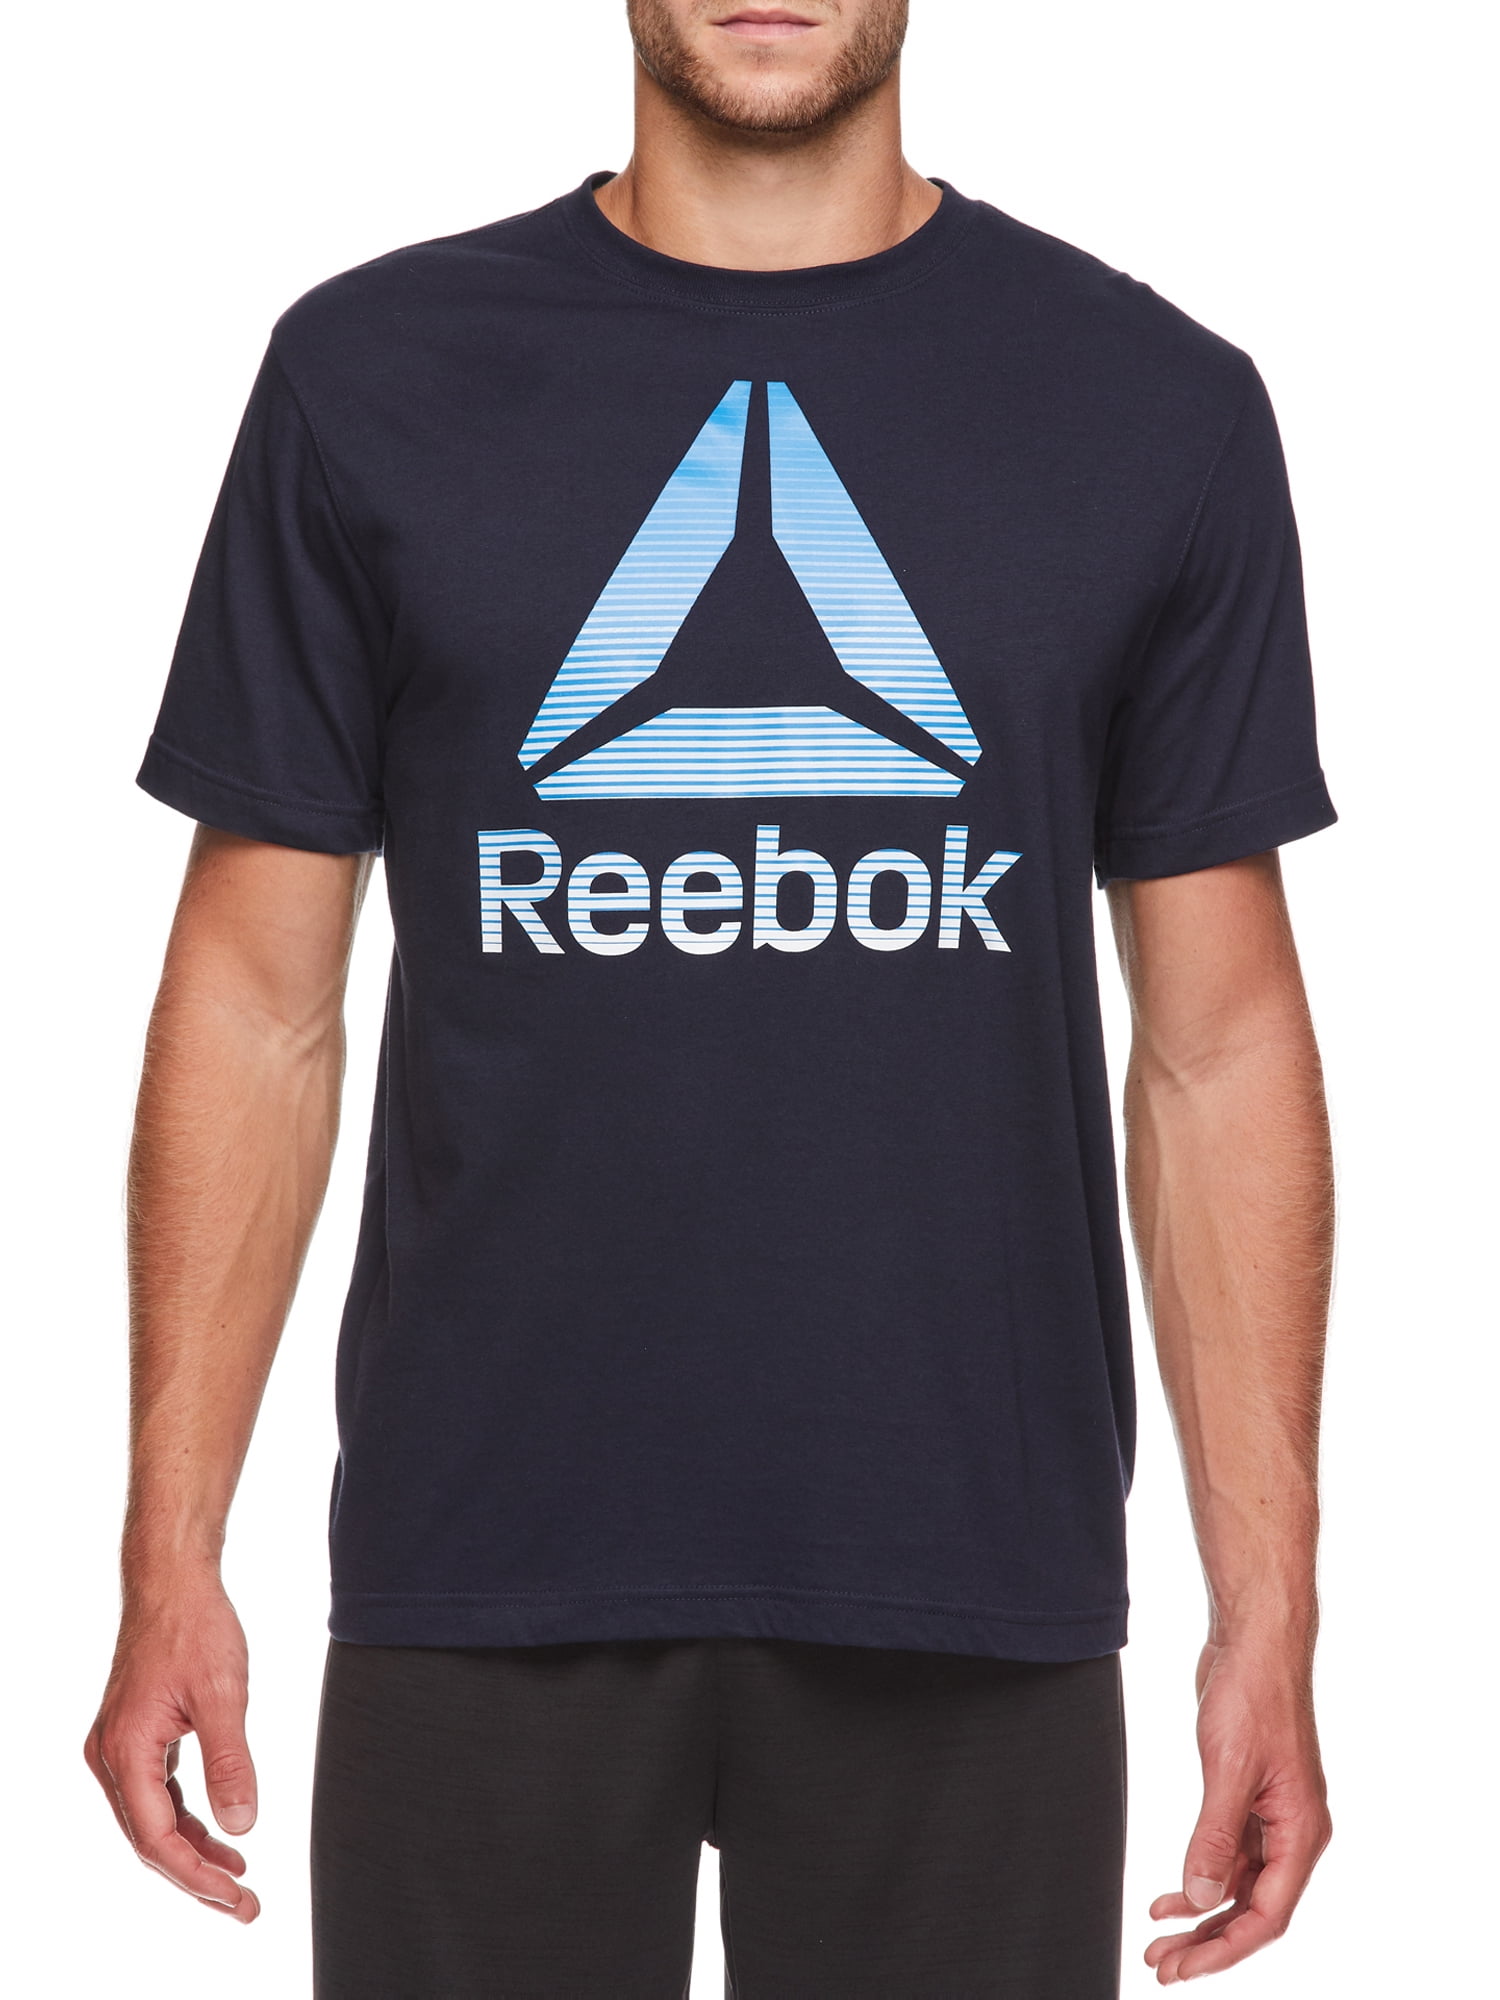 Reebok Men's Horizon T-Shirt - Walmart.com